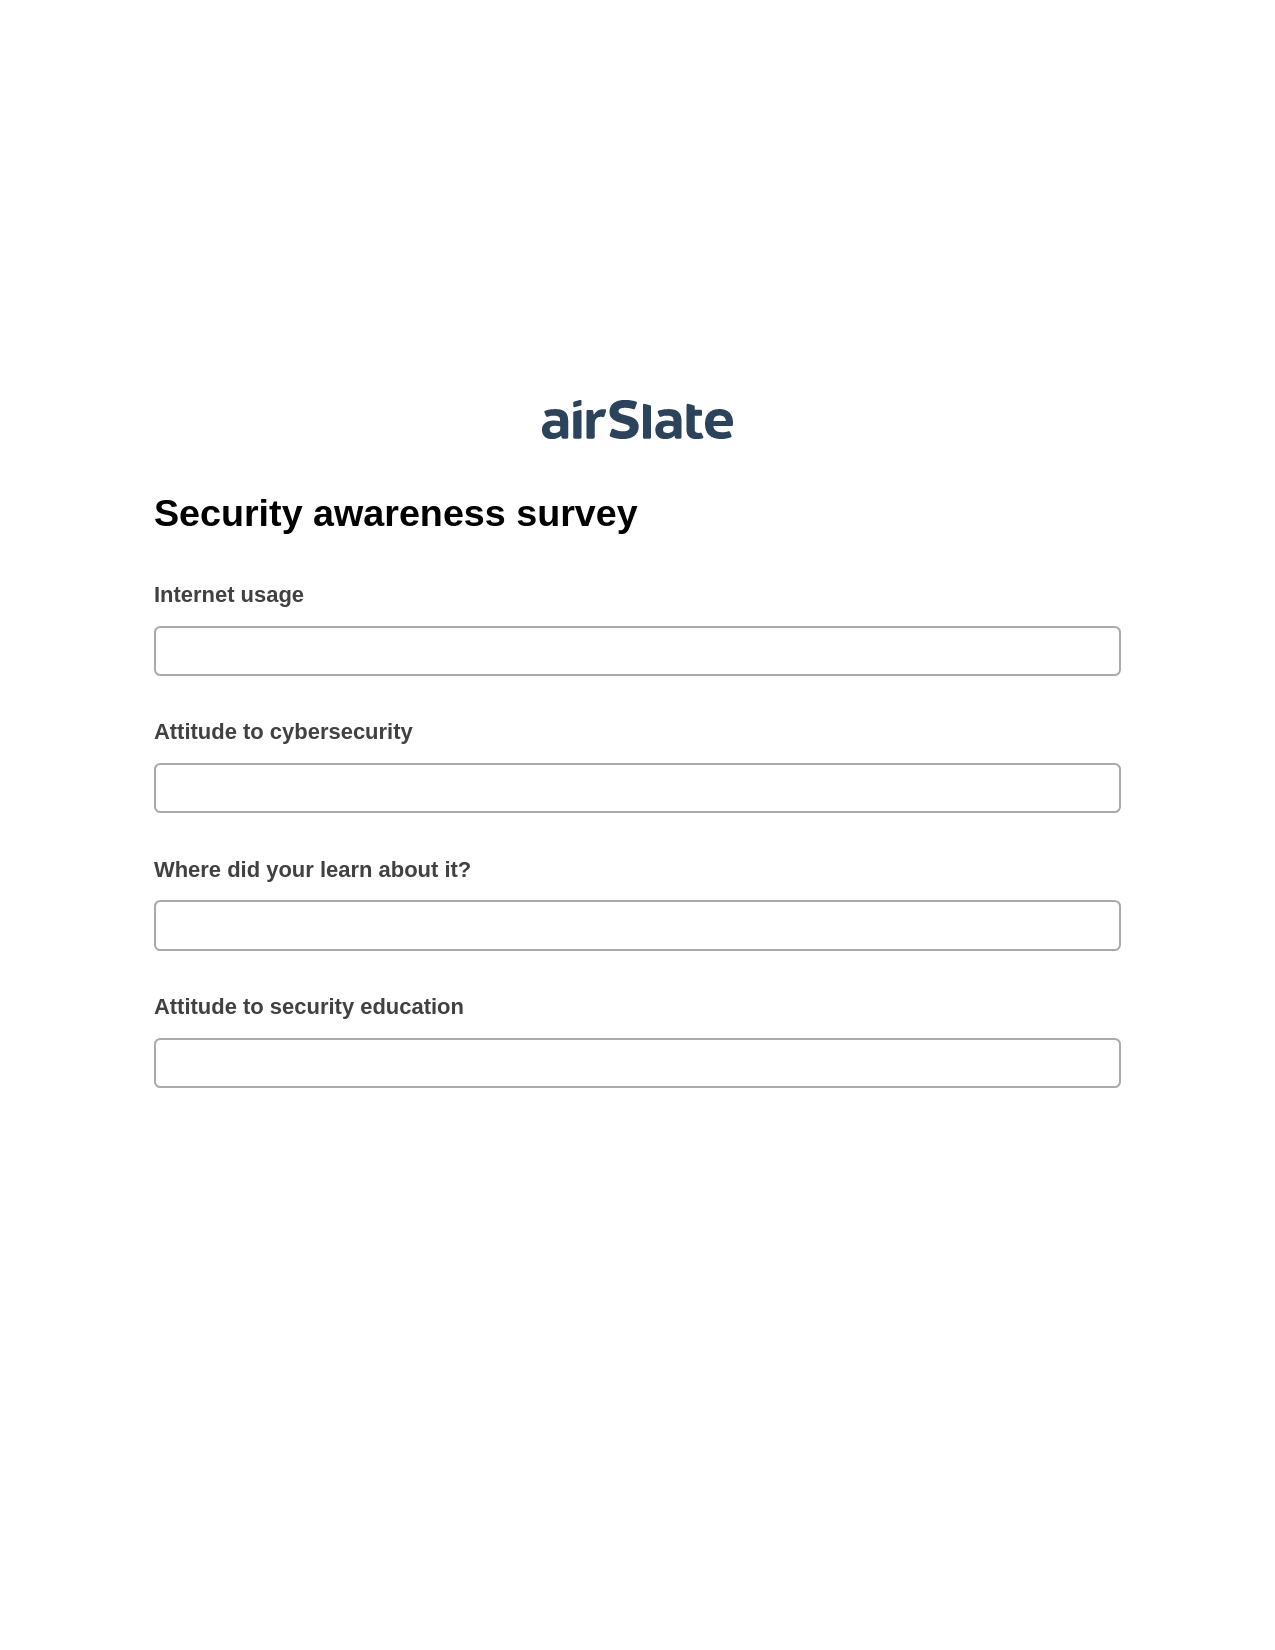 Security awareness survey Pre-fill from Salesforce Records with SOQL Bot, Google Calendar Bot, Webhook Postfinish Bot